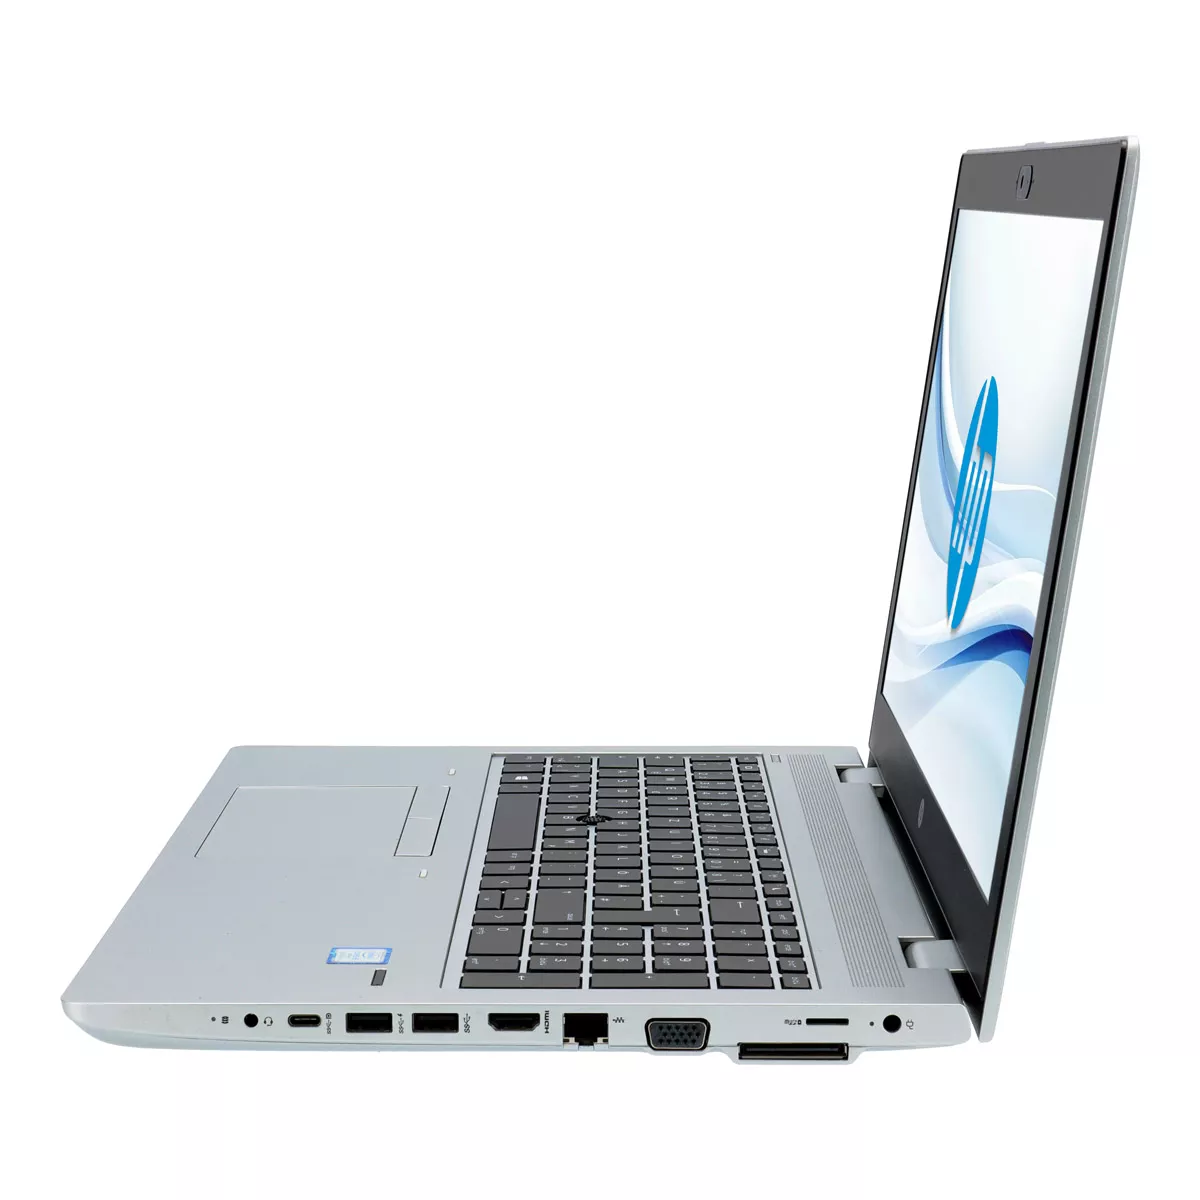 HP ProBook 650 G4 Core i5 8350U Full-HD 240 GB M.2 SSD Webcam A